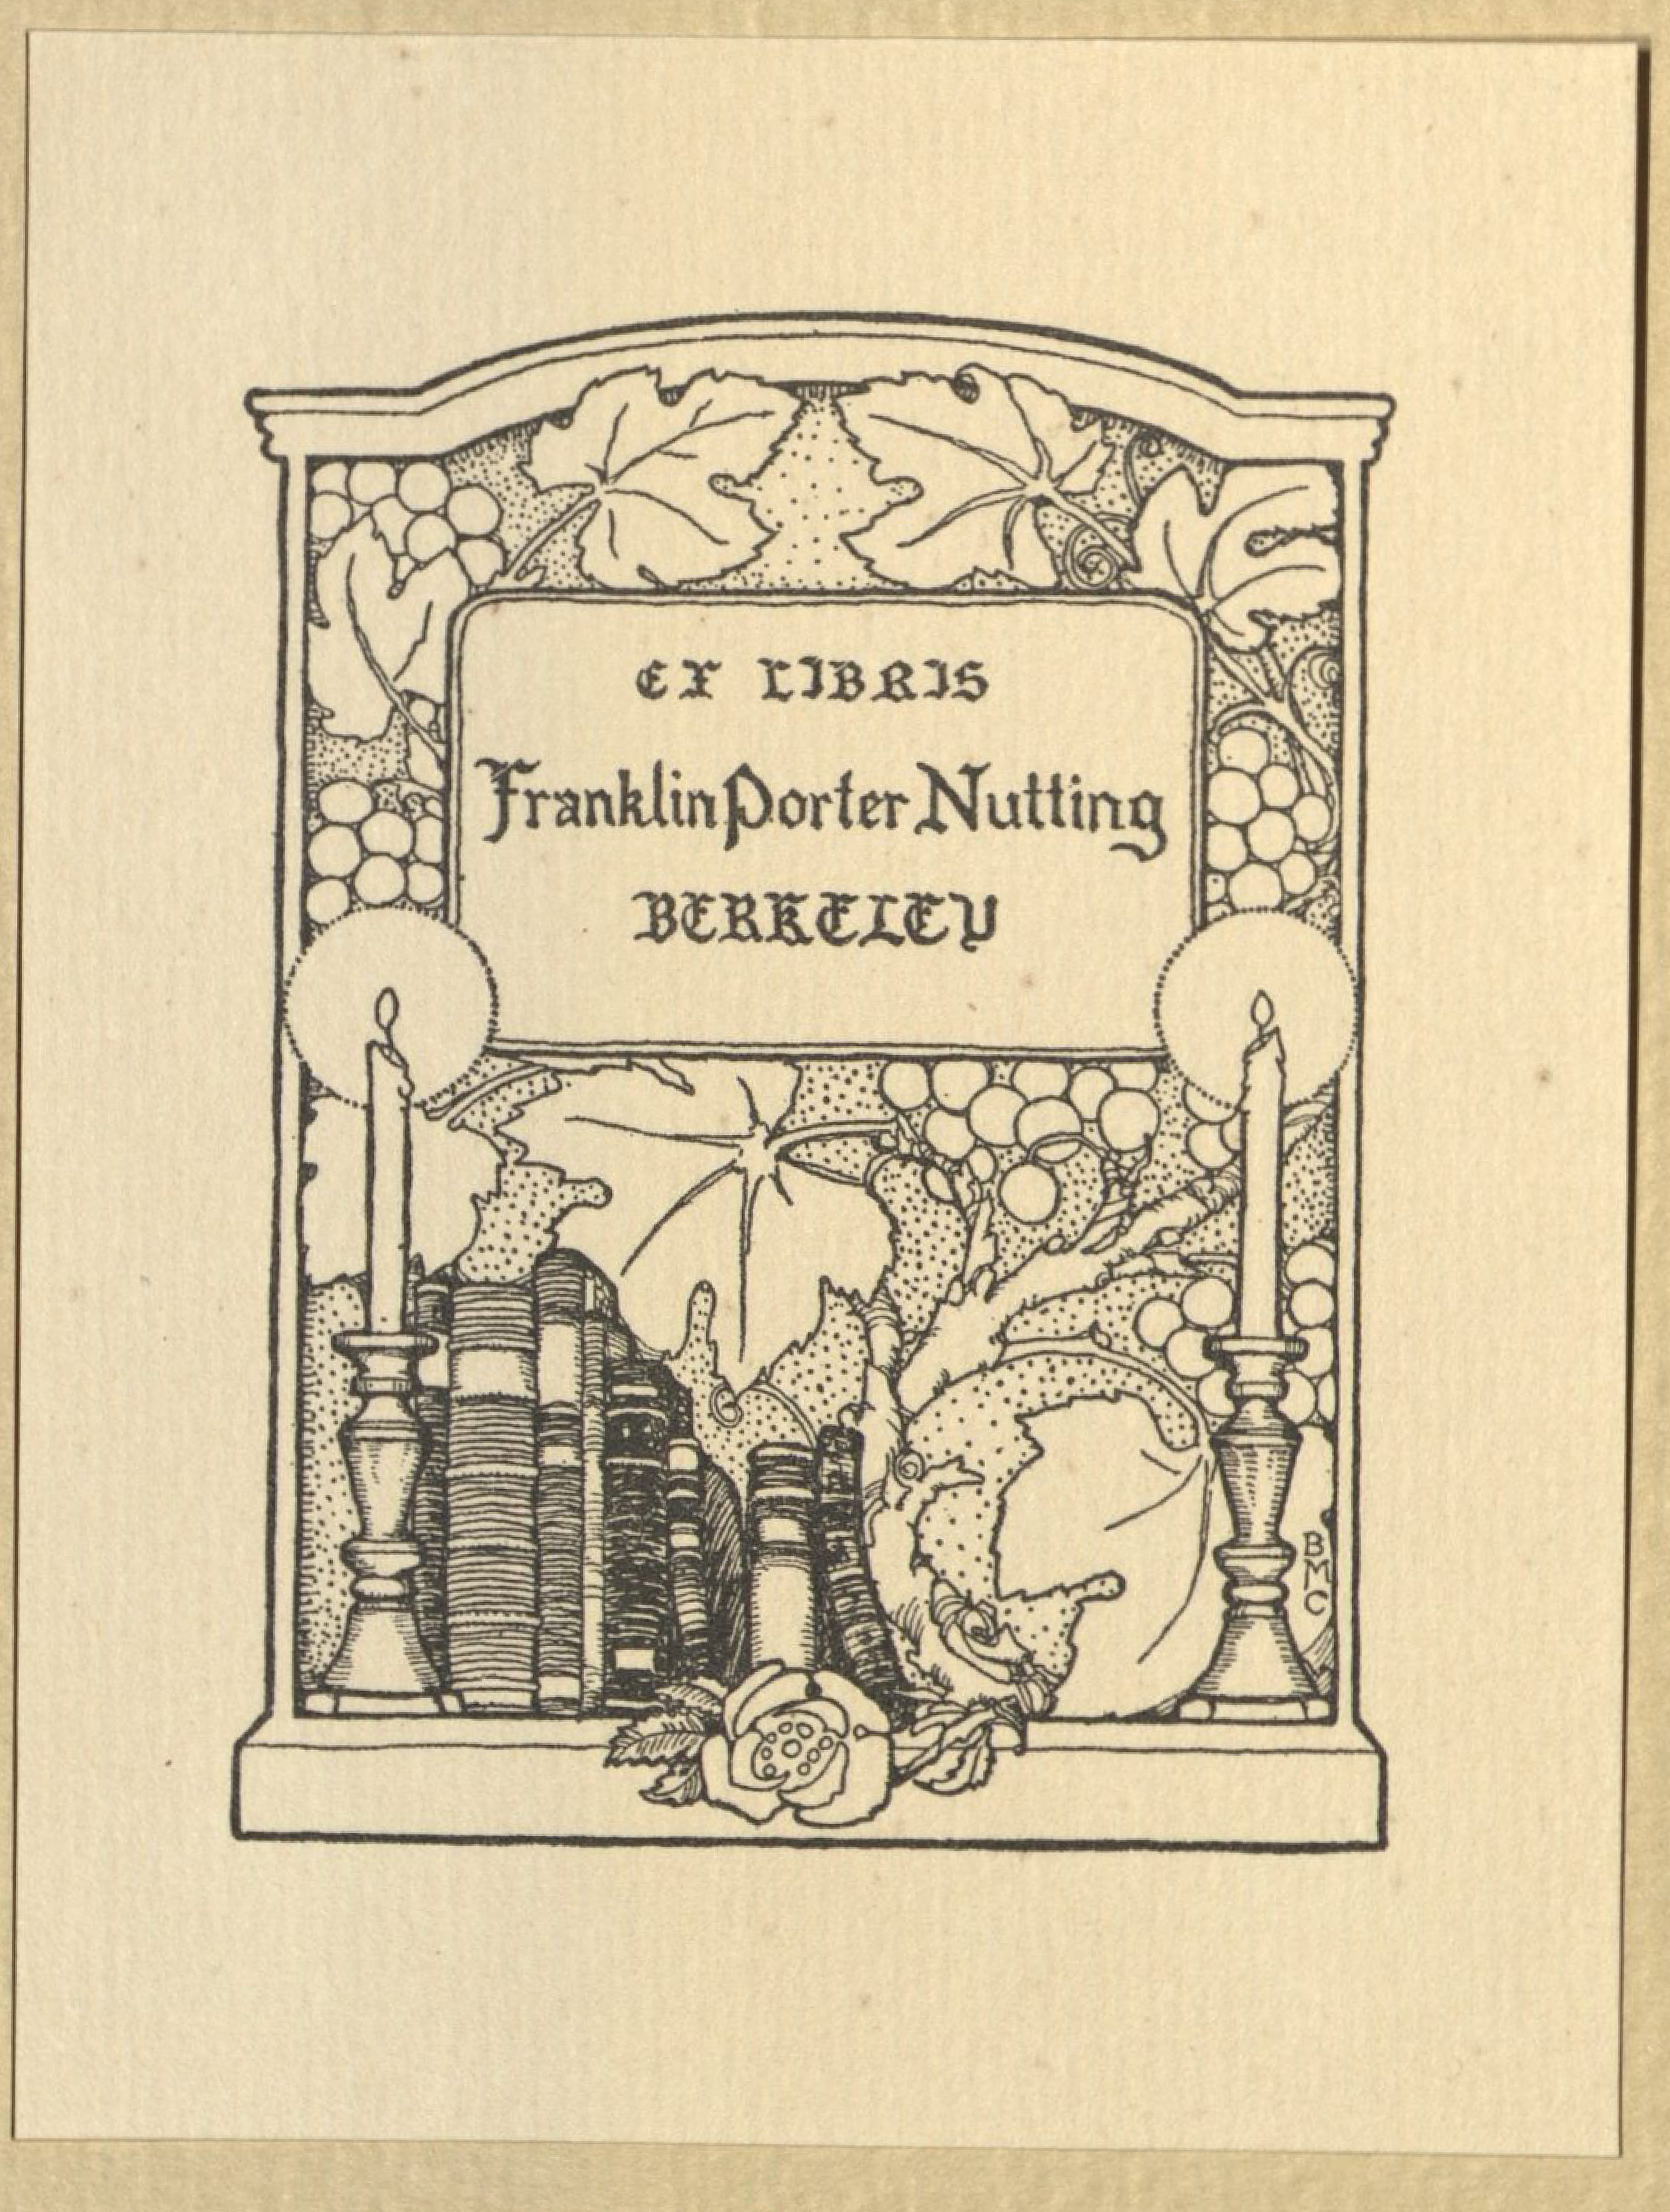 Bookplate of Franklin Porter Nutting.